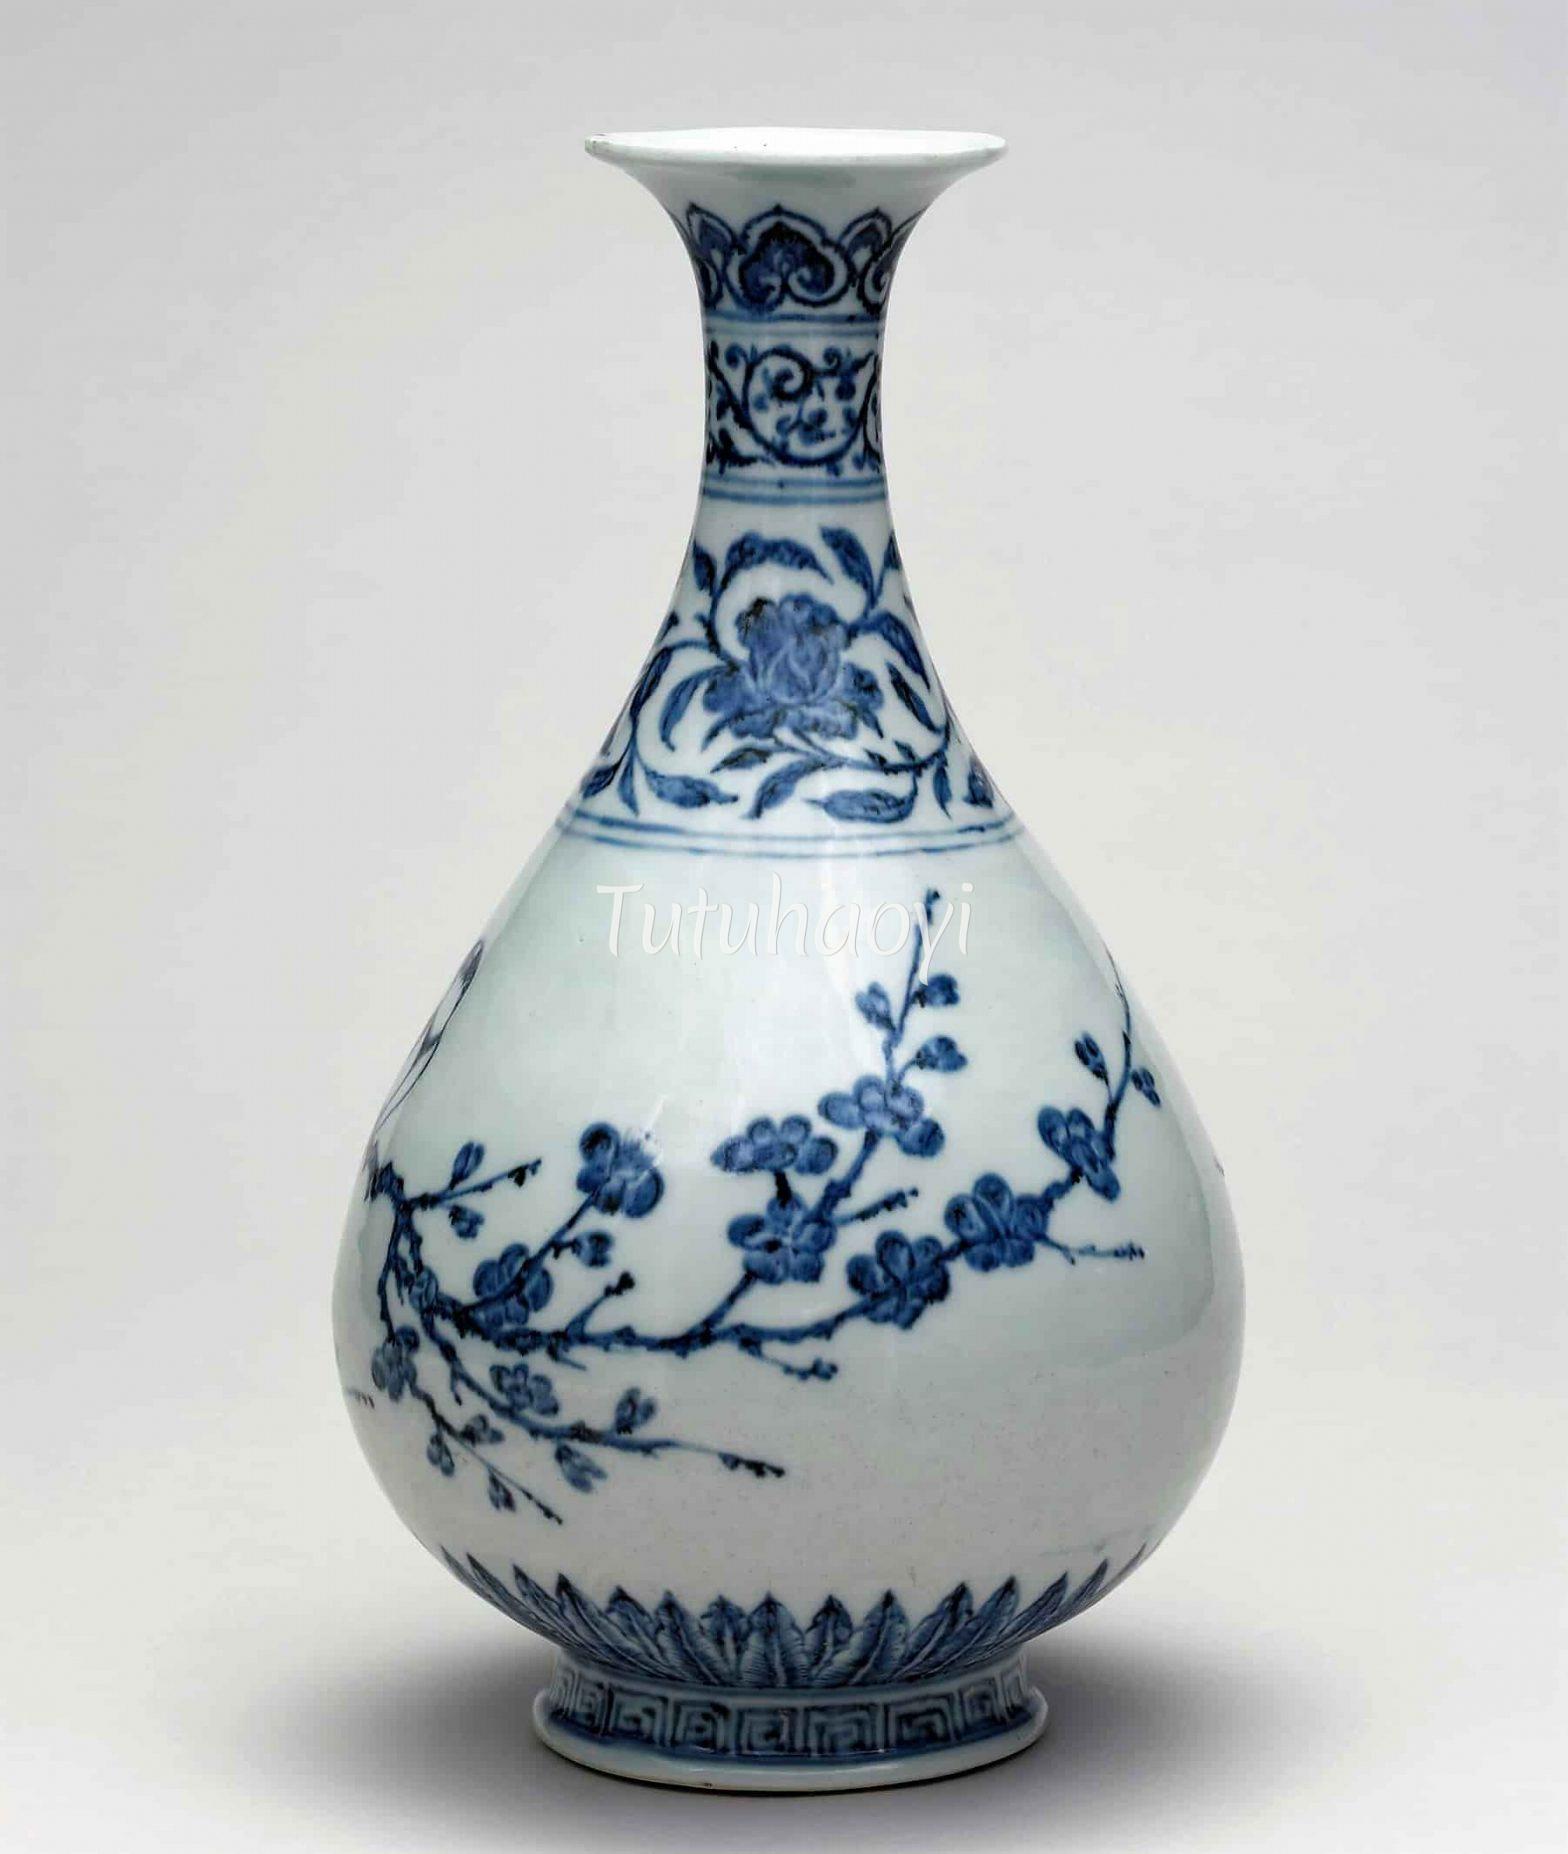 Yongle bottle plum blossom motif